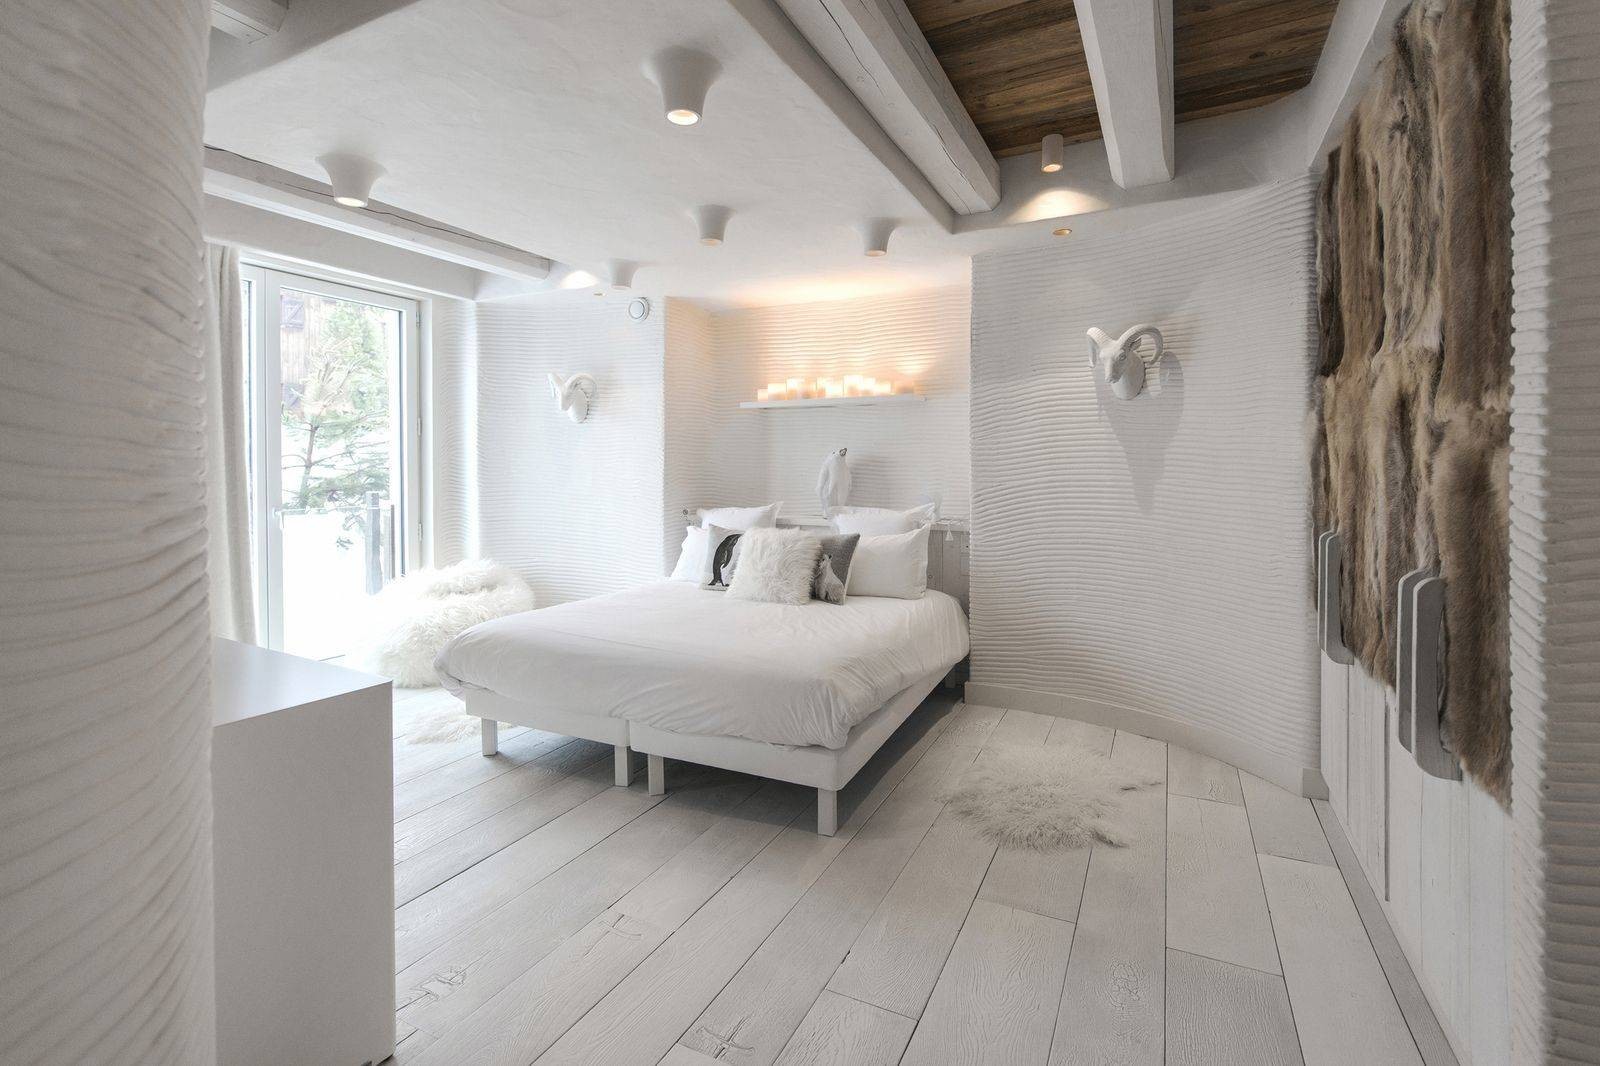 Courchevel 1550 Luxury Rental Chalet Niubise Bedroom